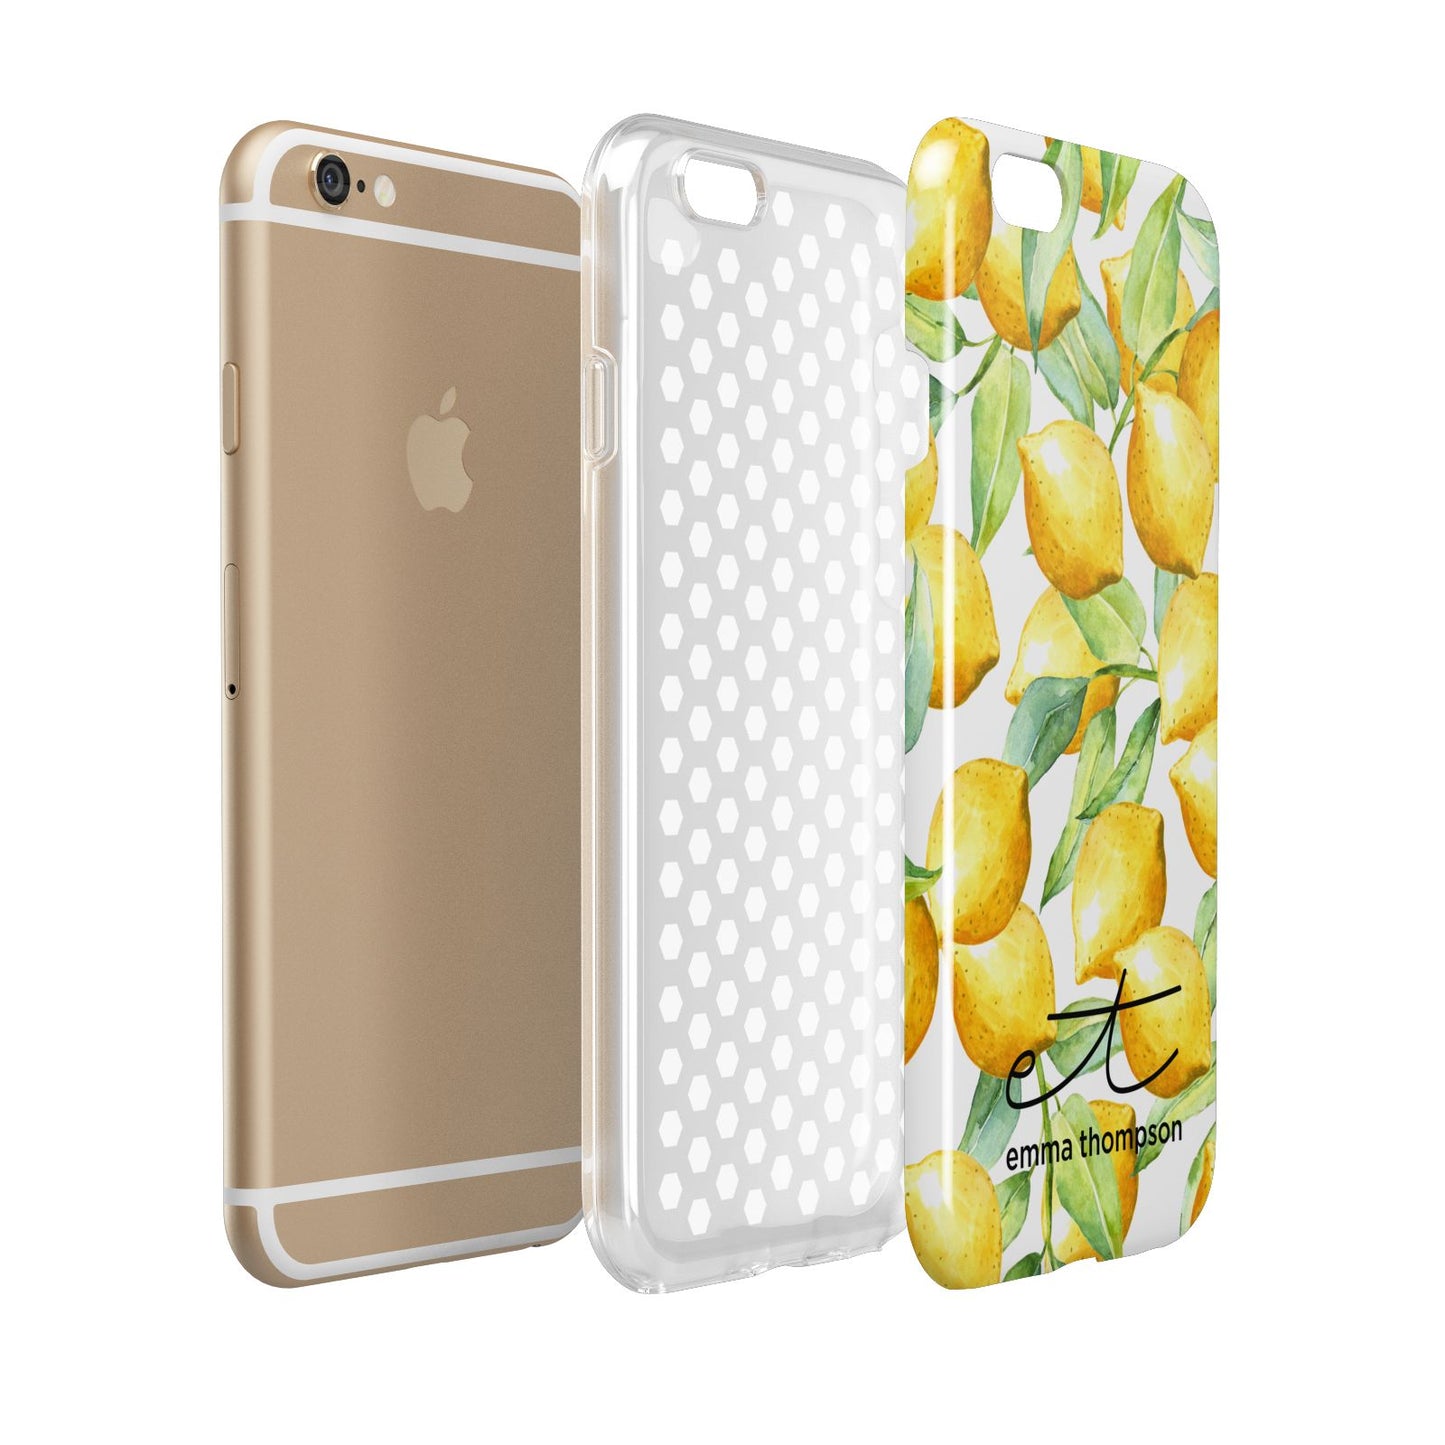 Personalised Lemons of Capri Apple iPhone 6 3D Tough Case Expanded view